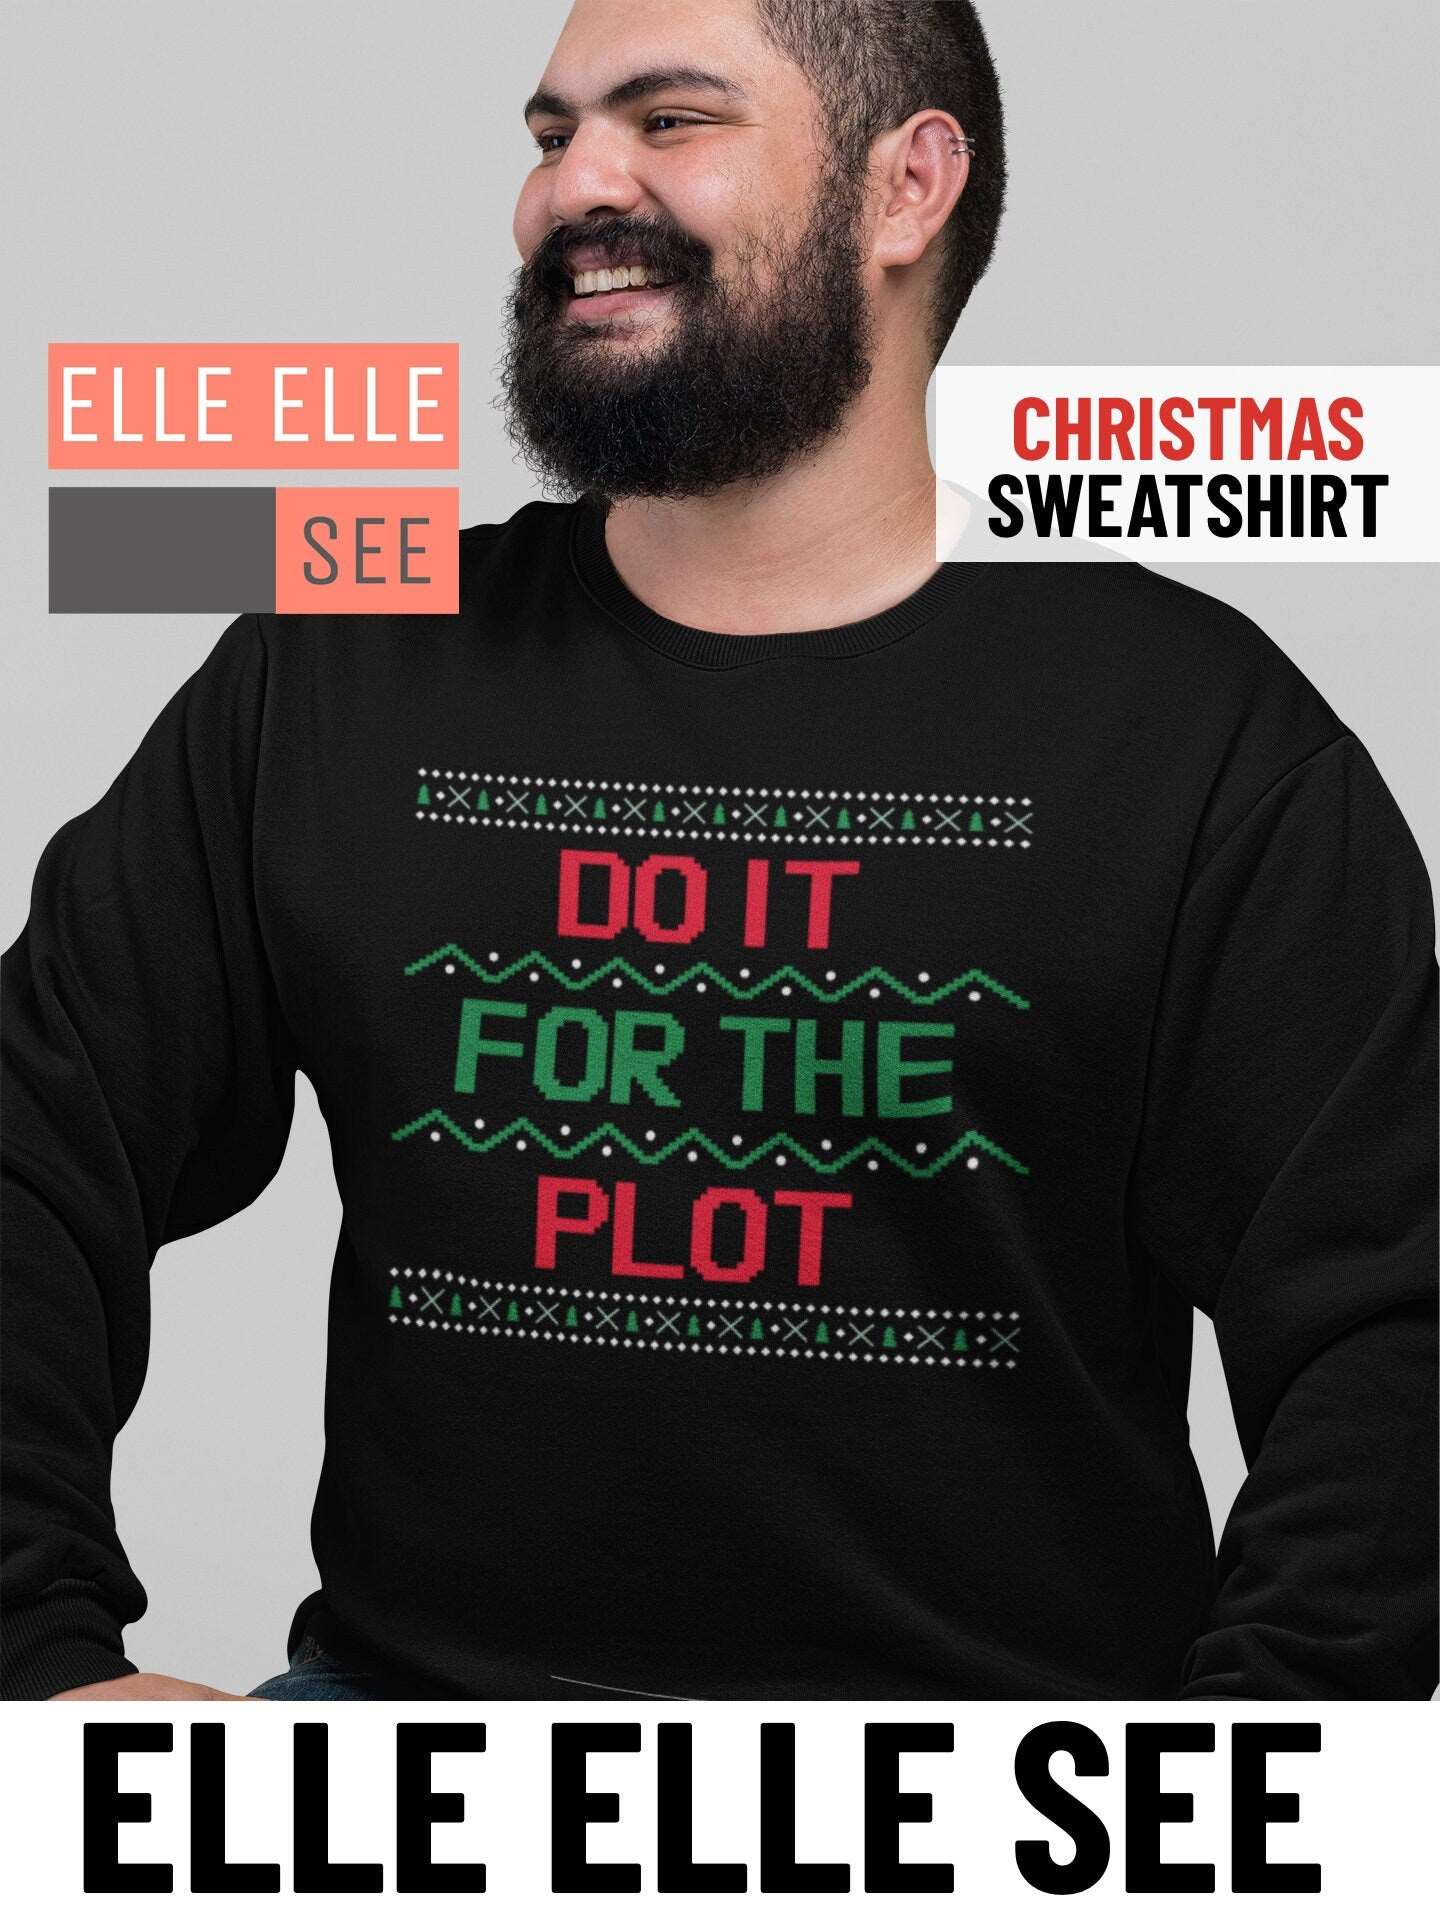 Do It For The Plot Sweatshirt - Christmas - Sweatshirt - Ugly Christmas - Christmas Sweater - Funny Sweatshirt - Do It For The Plot - Gen Z